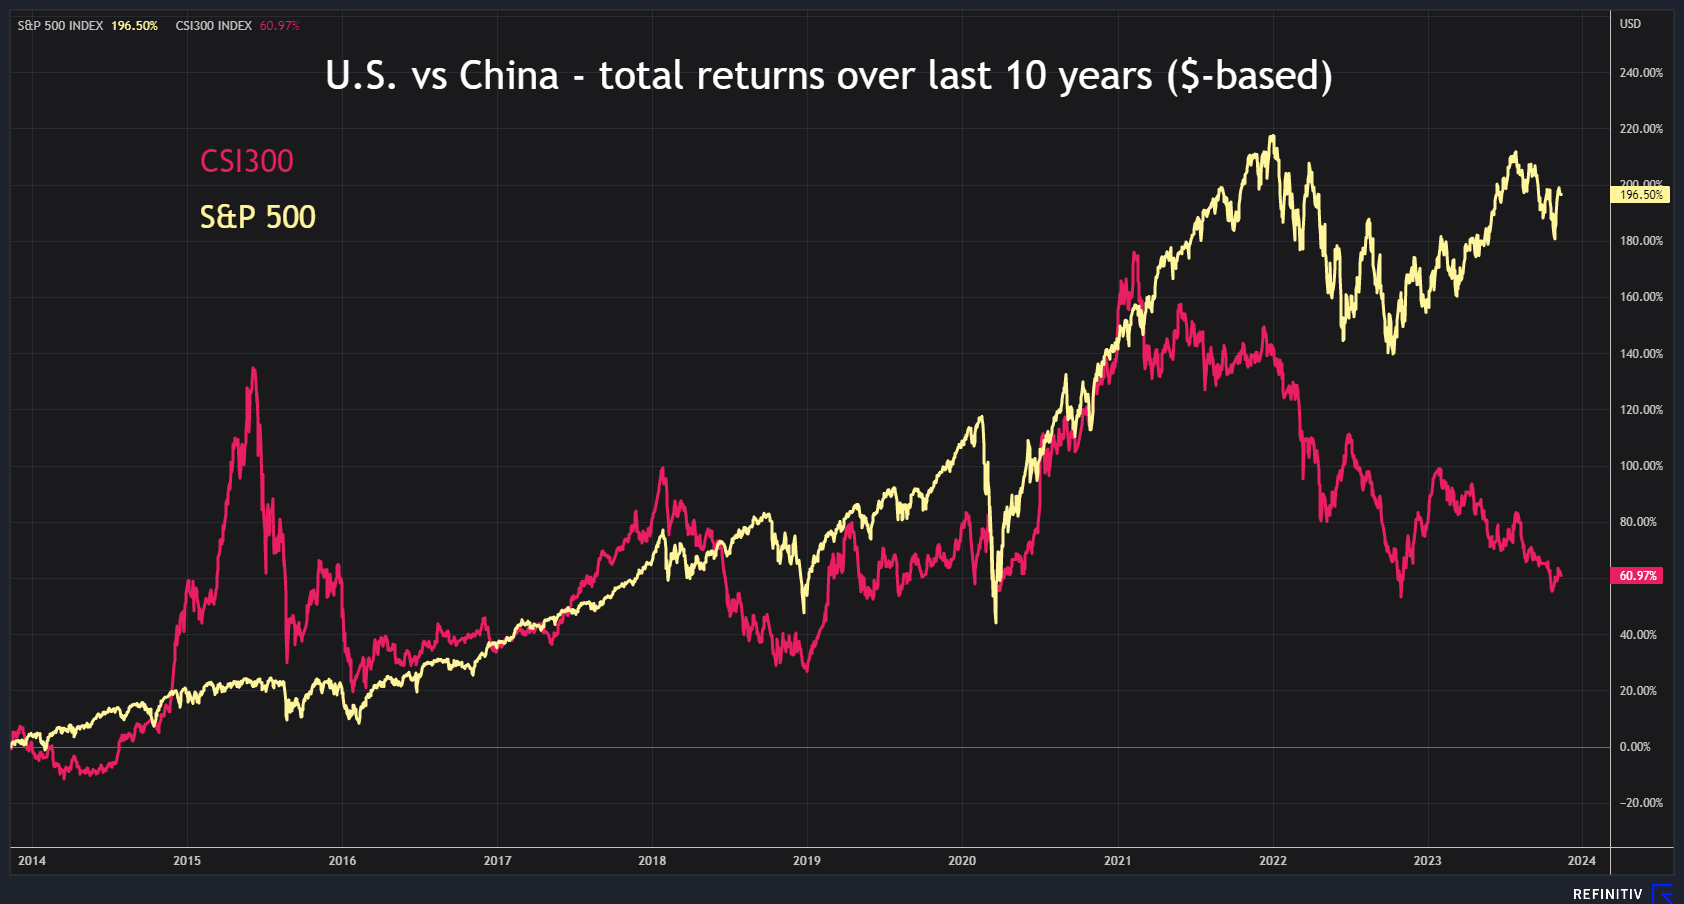 S&P 500 vs CSI300 - total returns over last 10 years